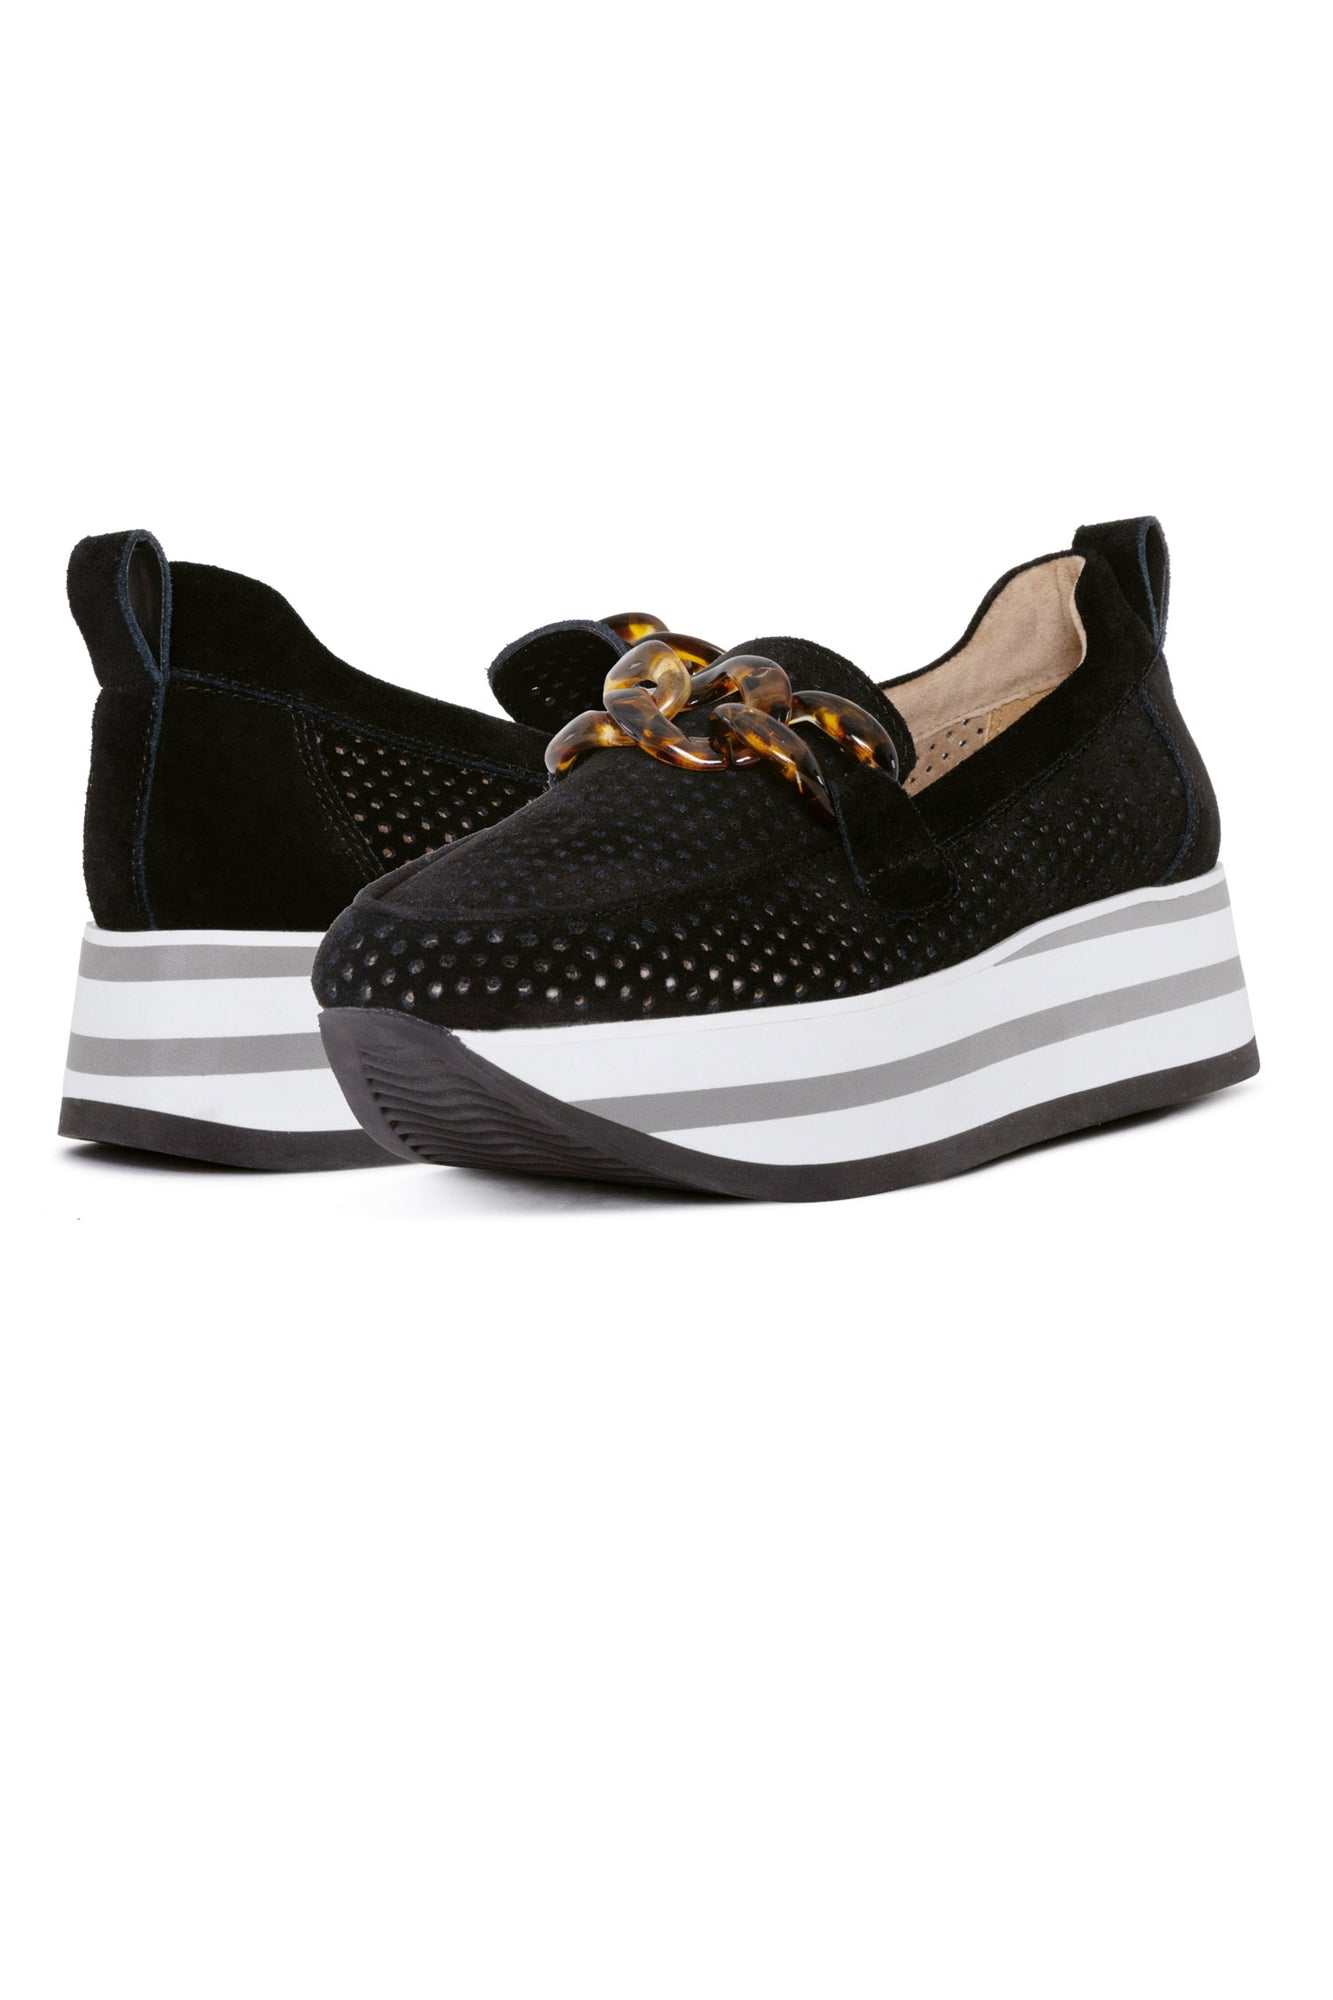 NYDJ Fern Platform Loafers In Suede - Black